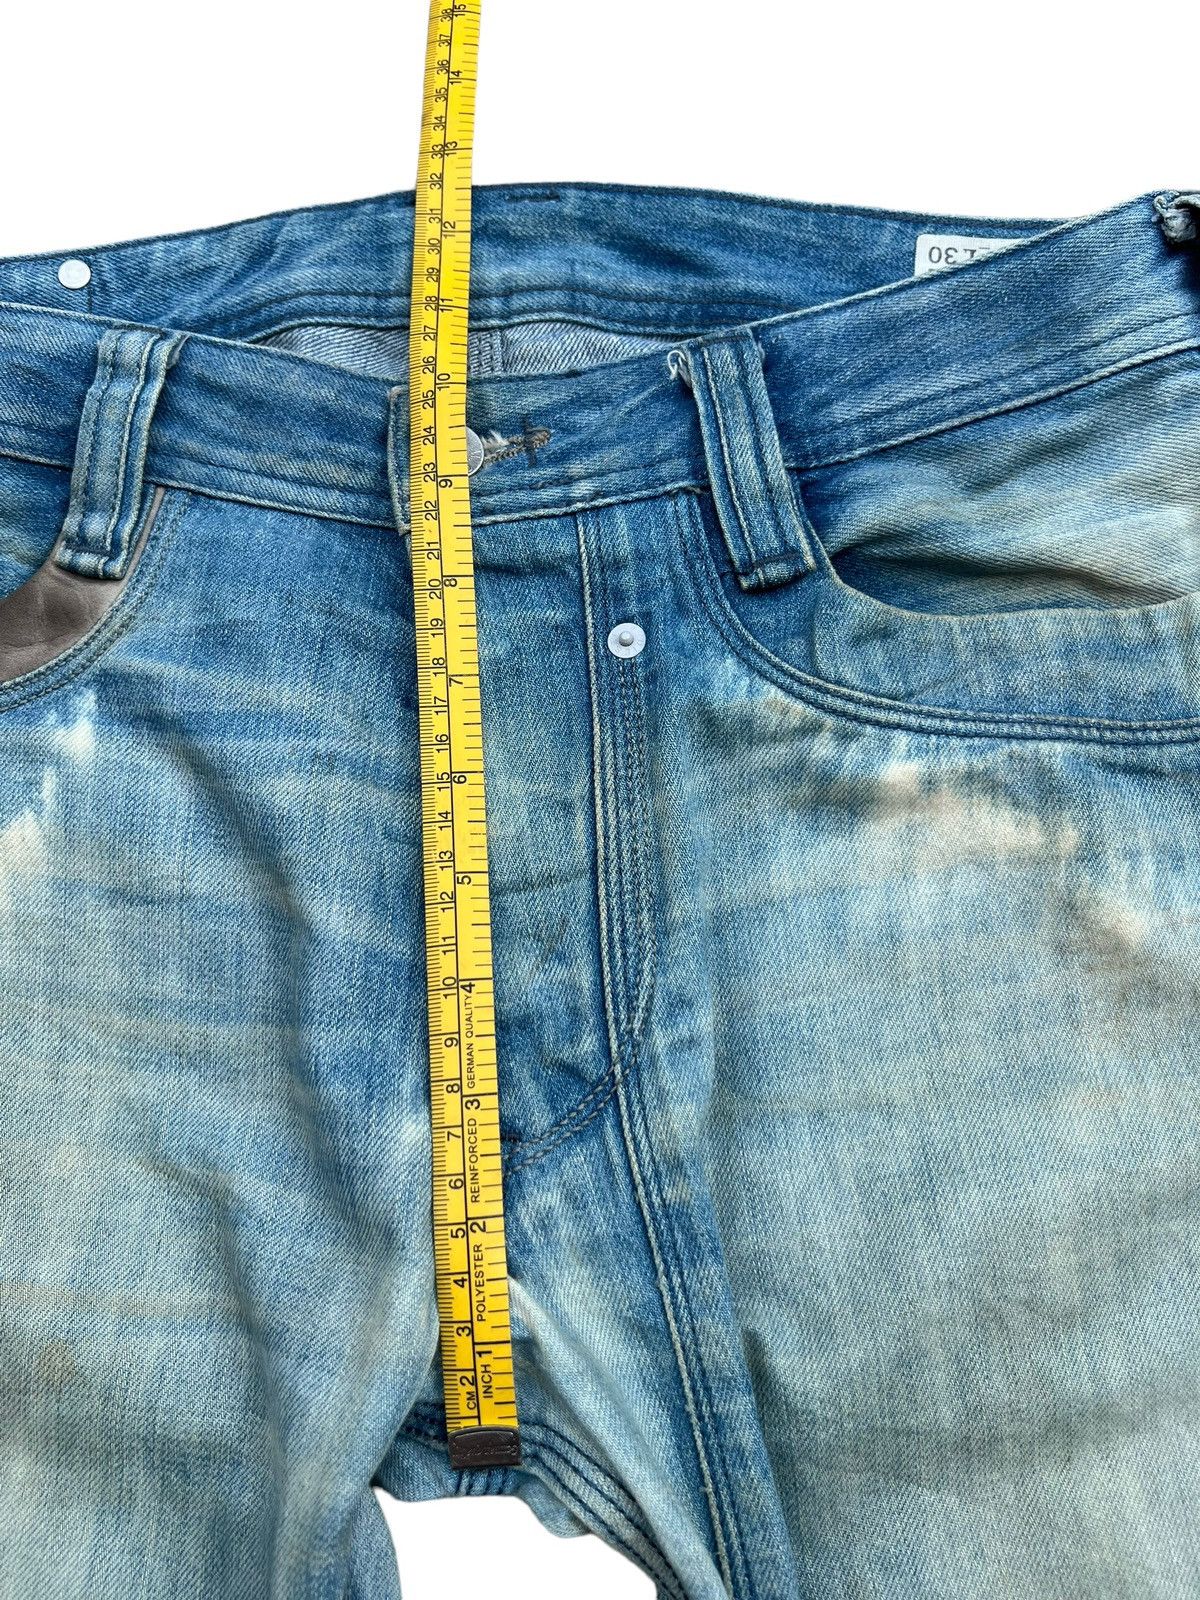 Vintage Diesel Leather Faded Distressed Denim Jeans 32x31 - 14